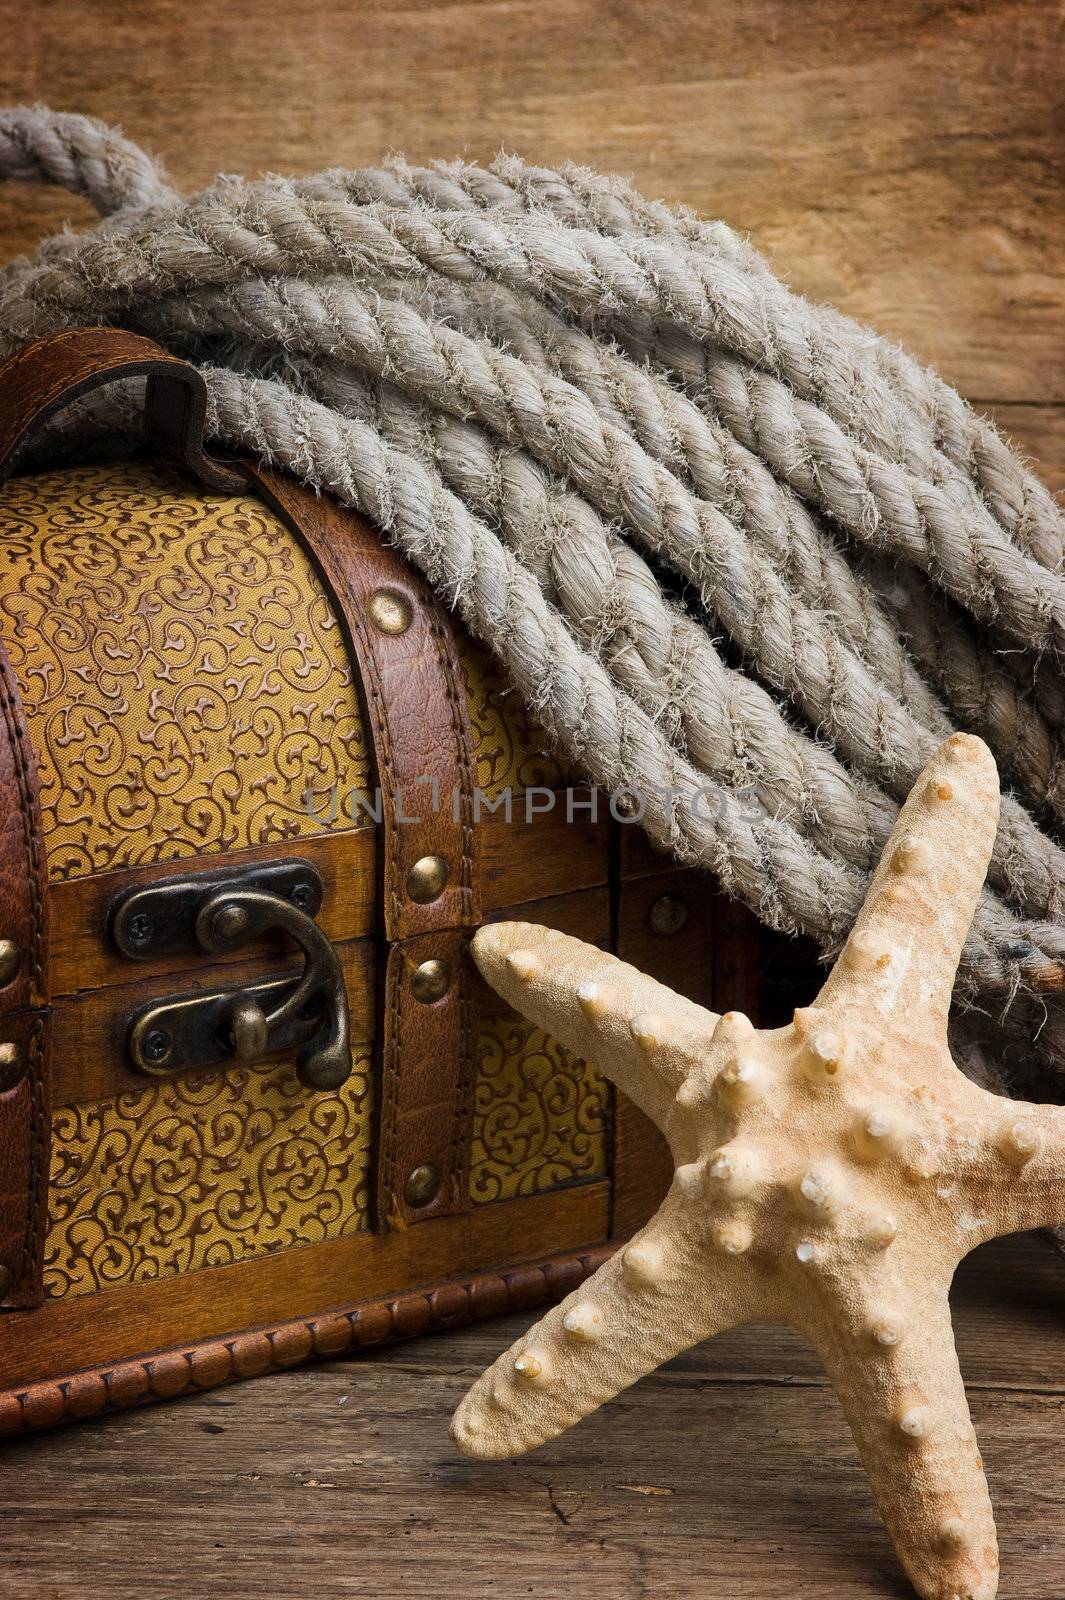 Pirate treasure chest by oleg_zhukov